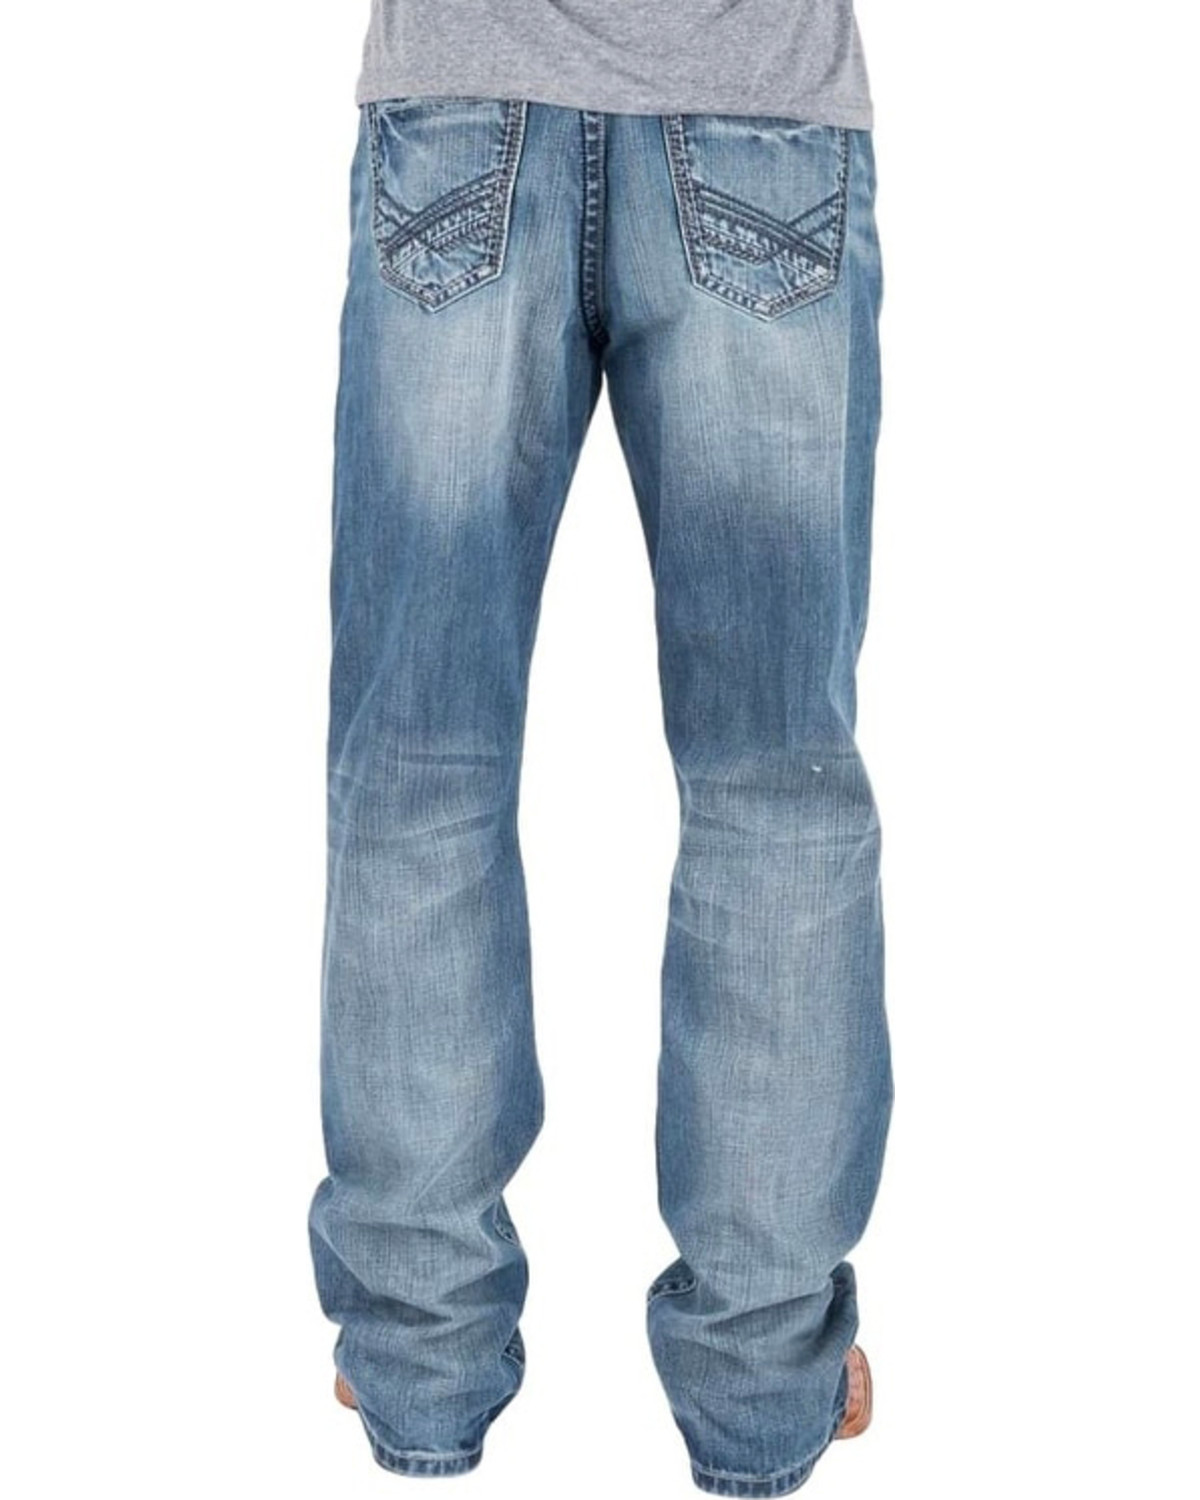 Tin Haul Men's Regular Joe Fit Light Wash Bootcut Jeans